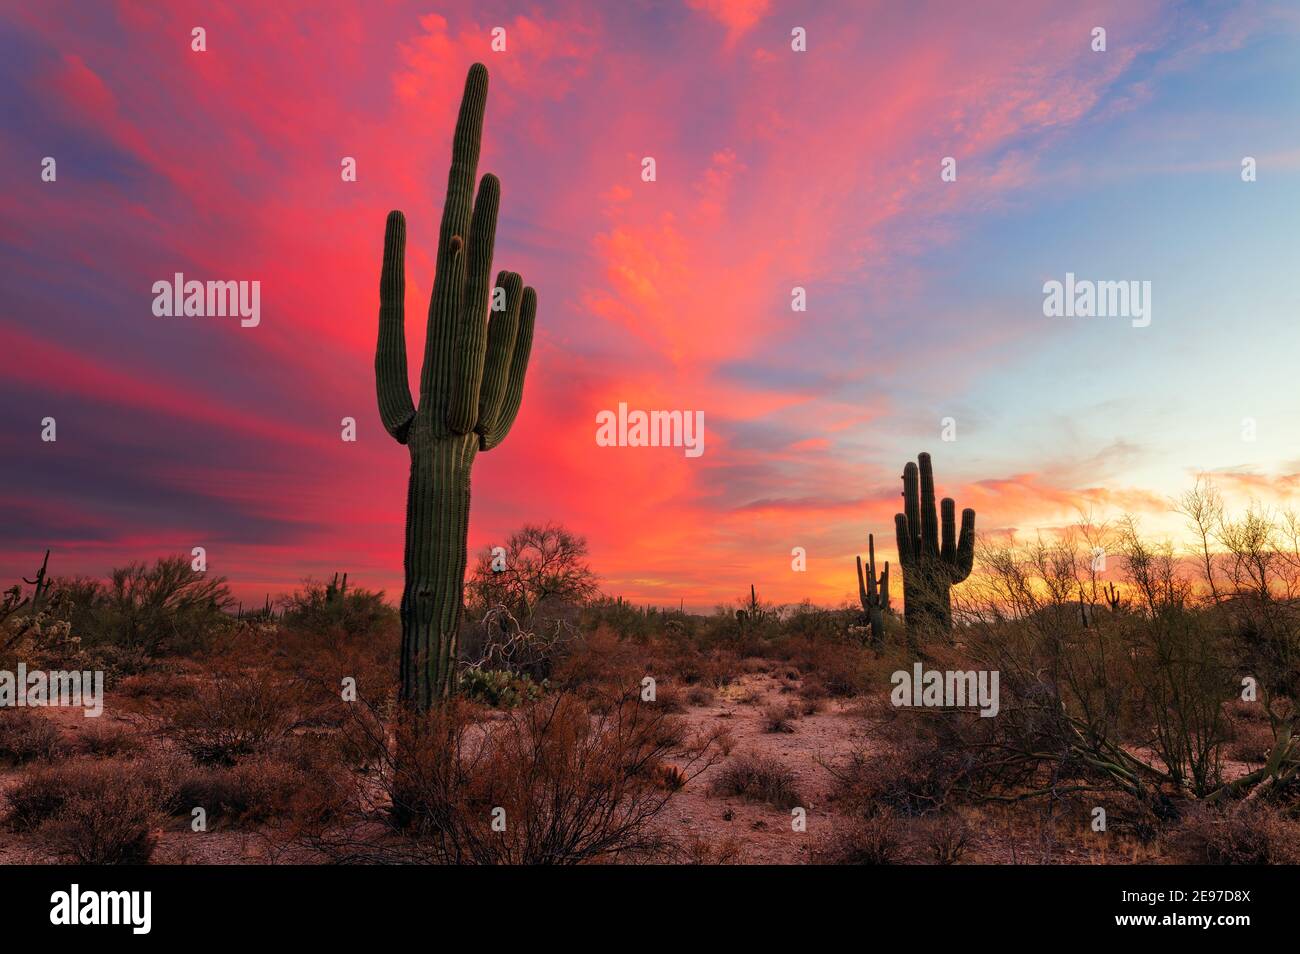 Saguaro Cactus silhouette and desert landscape at sunset in Phoenix, Arizona Stock Photo